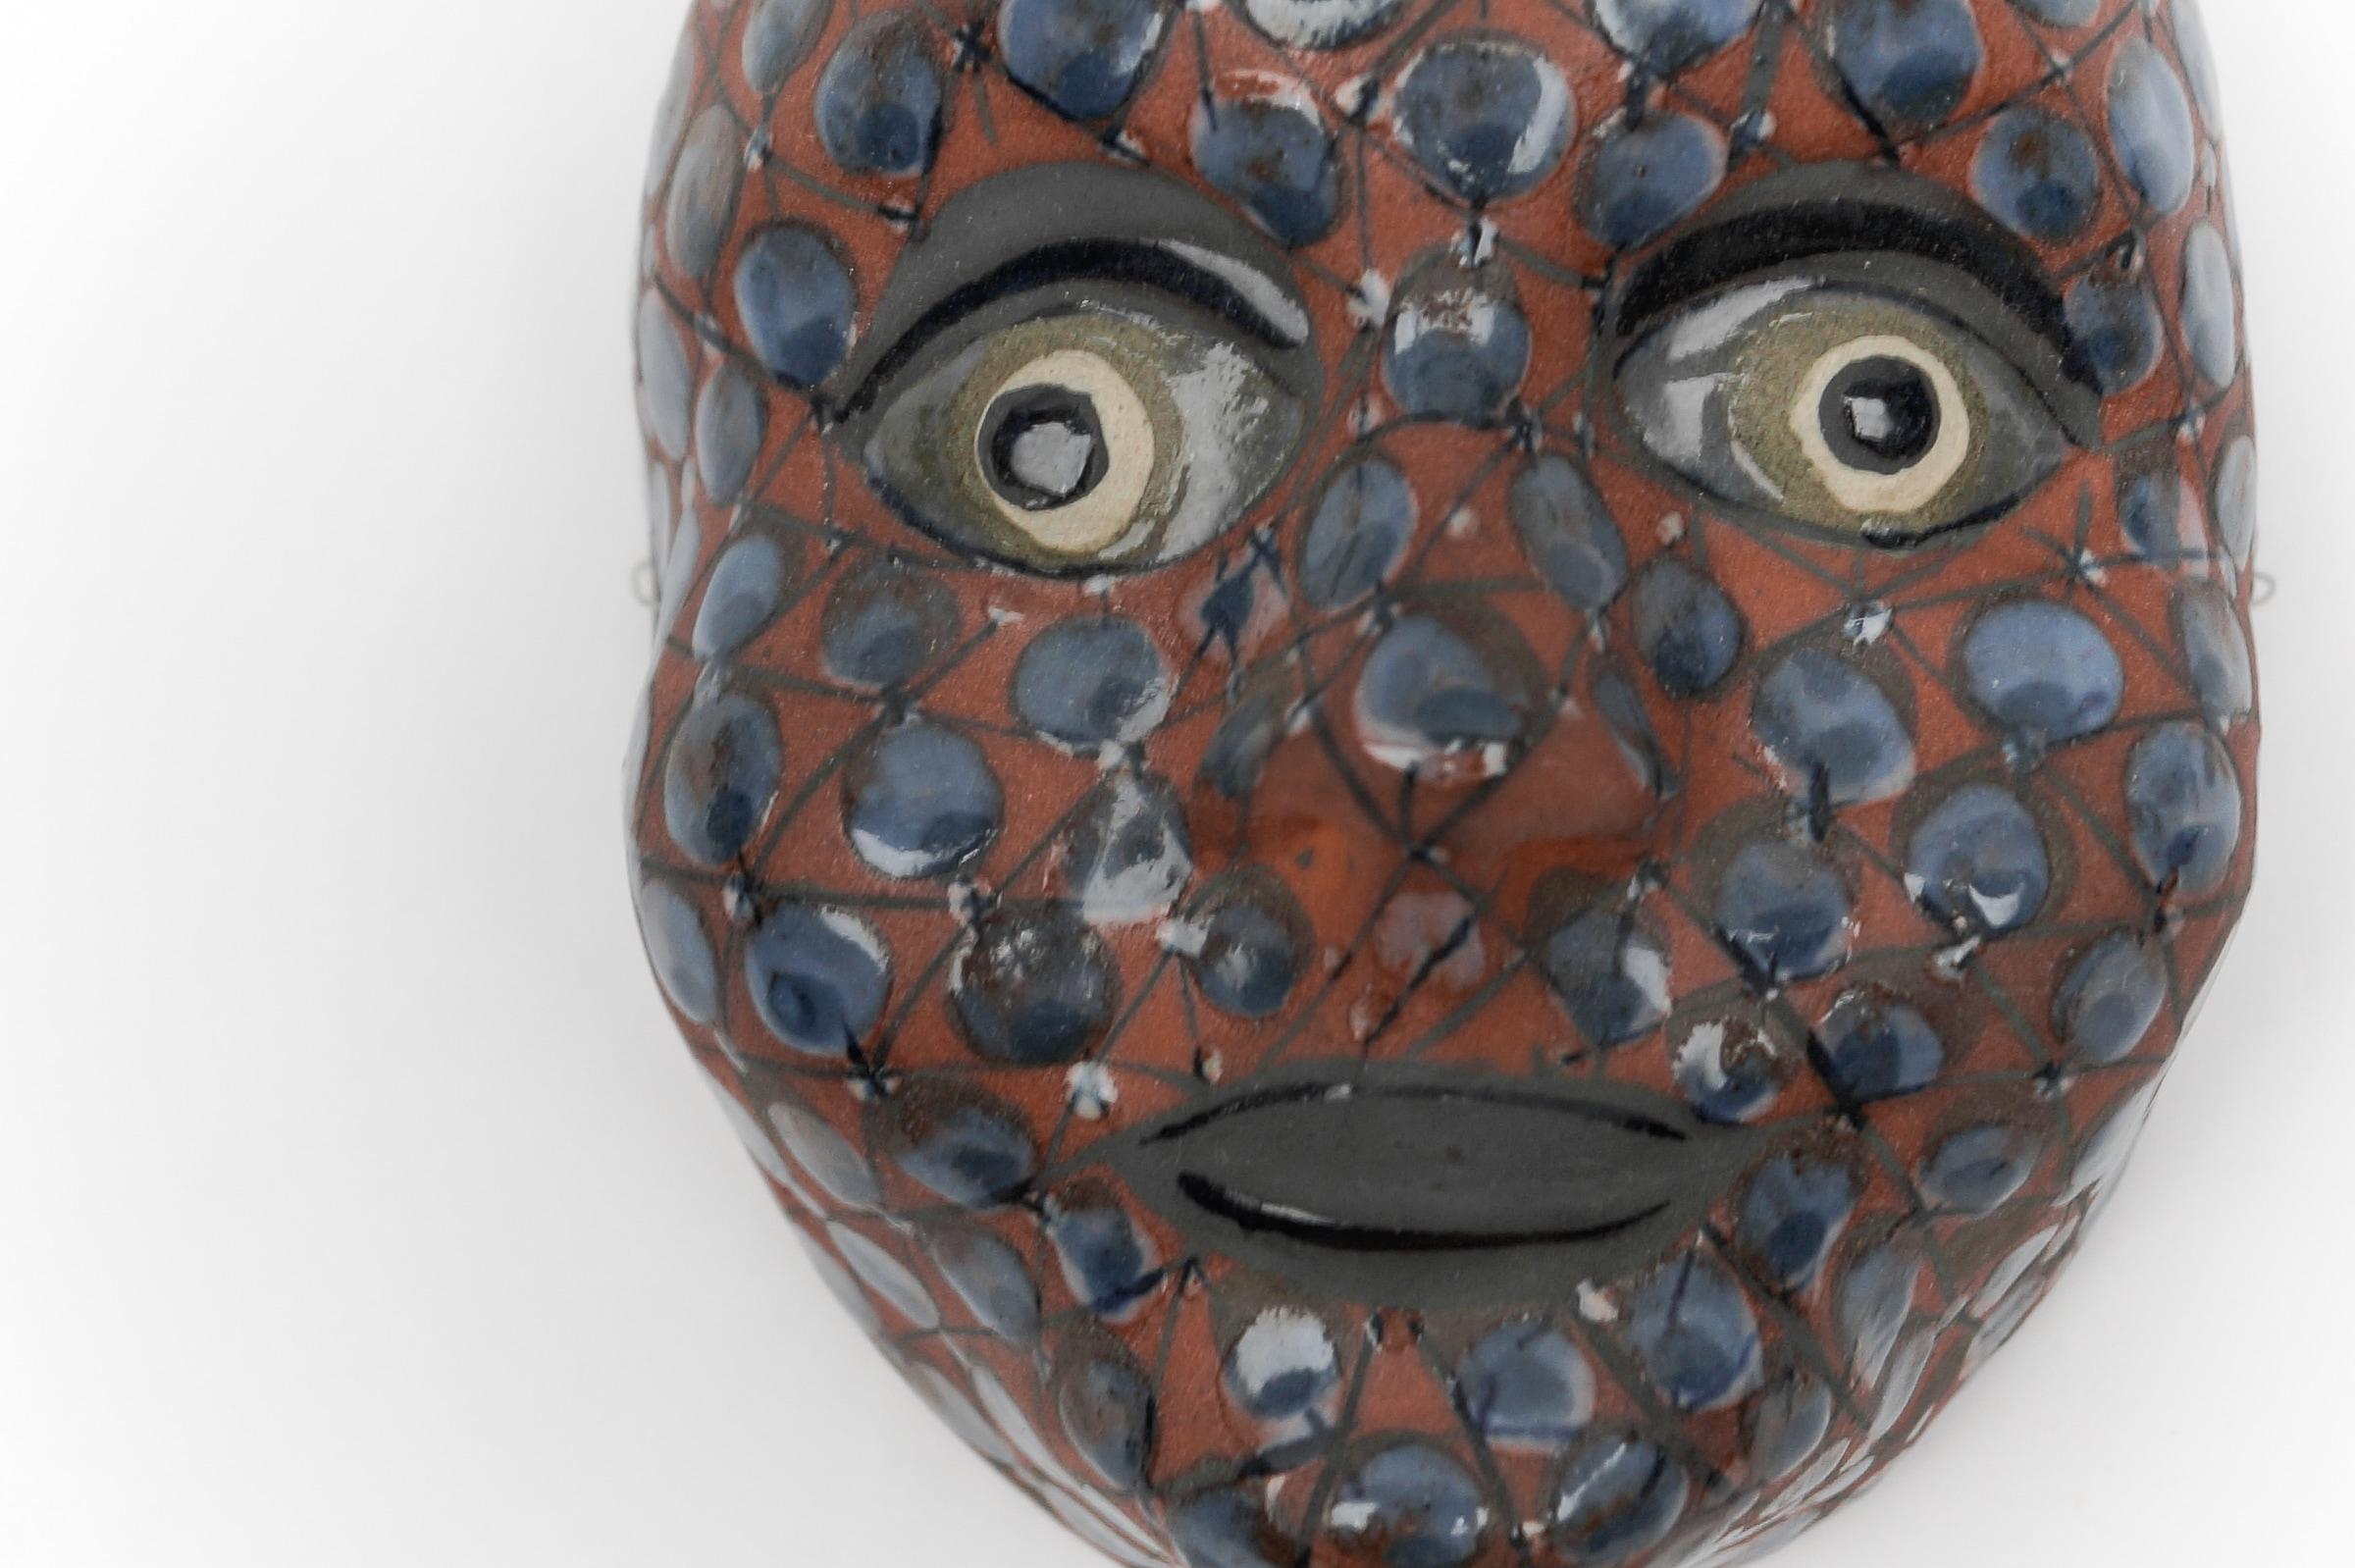 Danish Mid-Century Modern Handmade Wall Ceramic Mask by DYBDAHL, 1960s Denmark For Sale